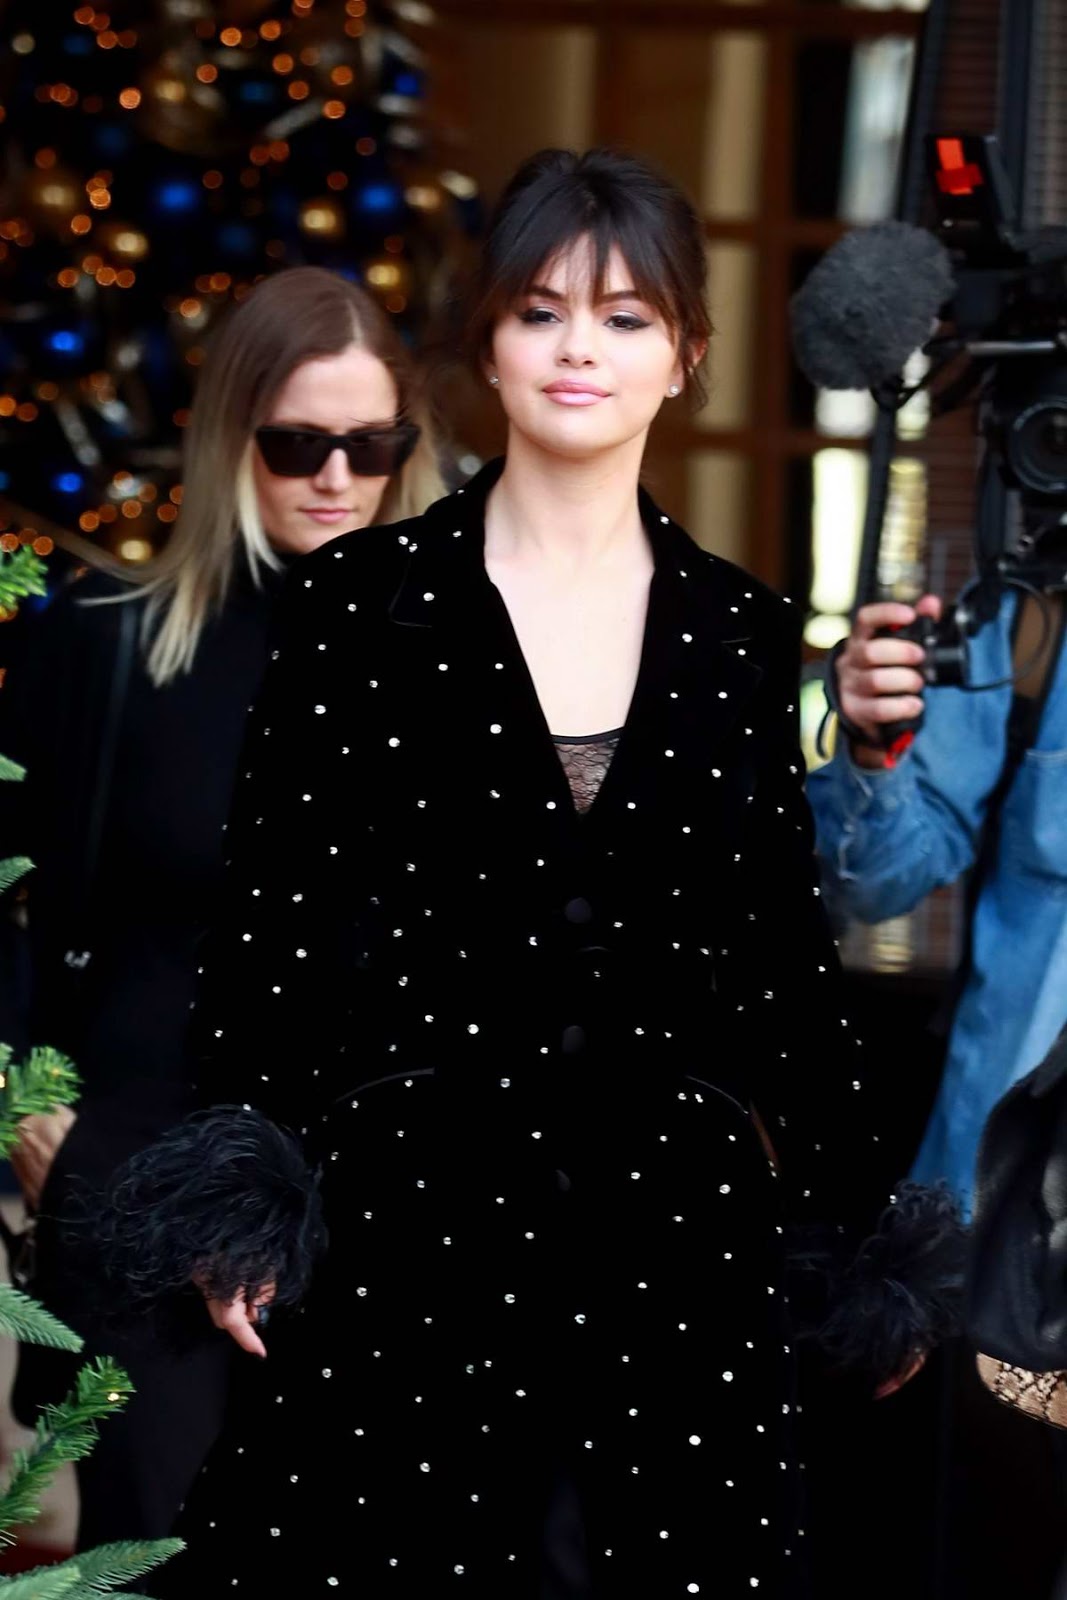 Selena Gomez looks stunning in black ensemble at the Ritz hotel in Paris, France